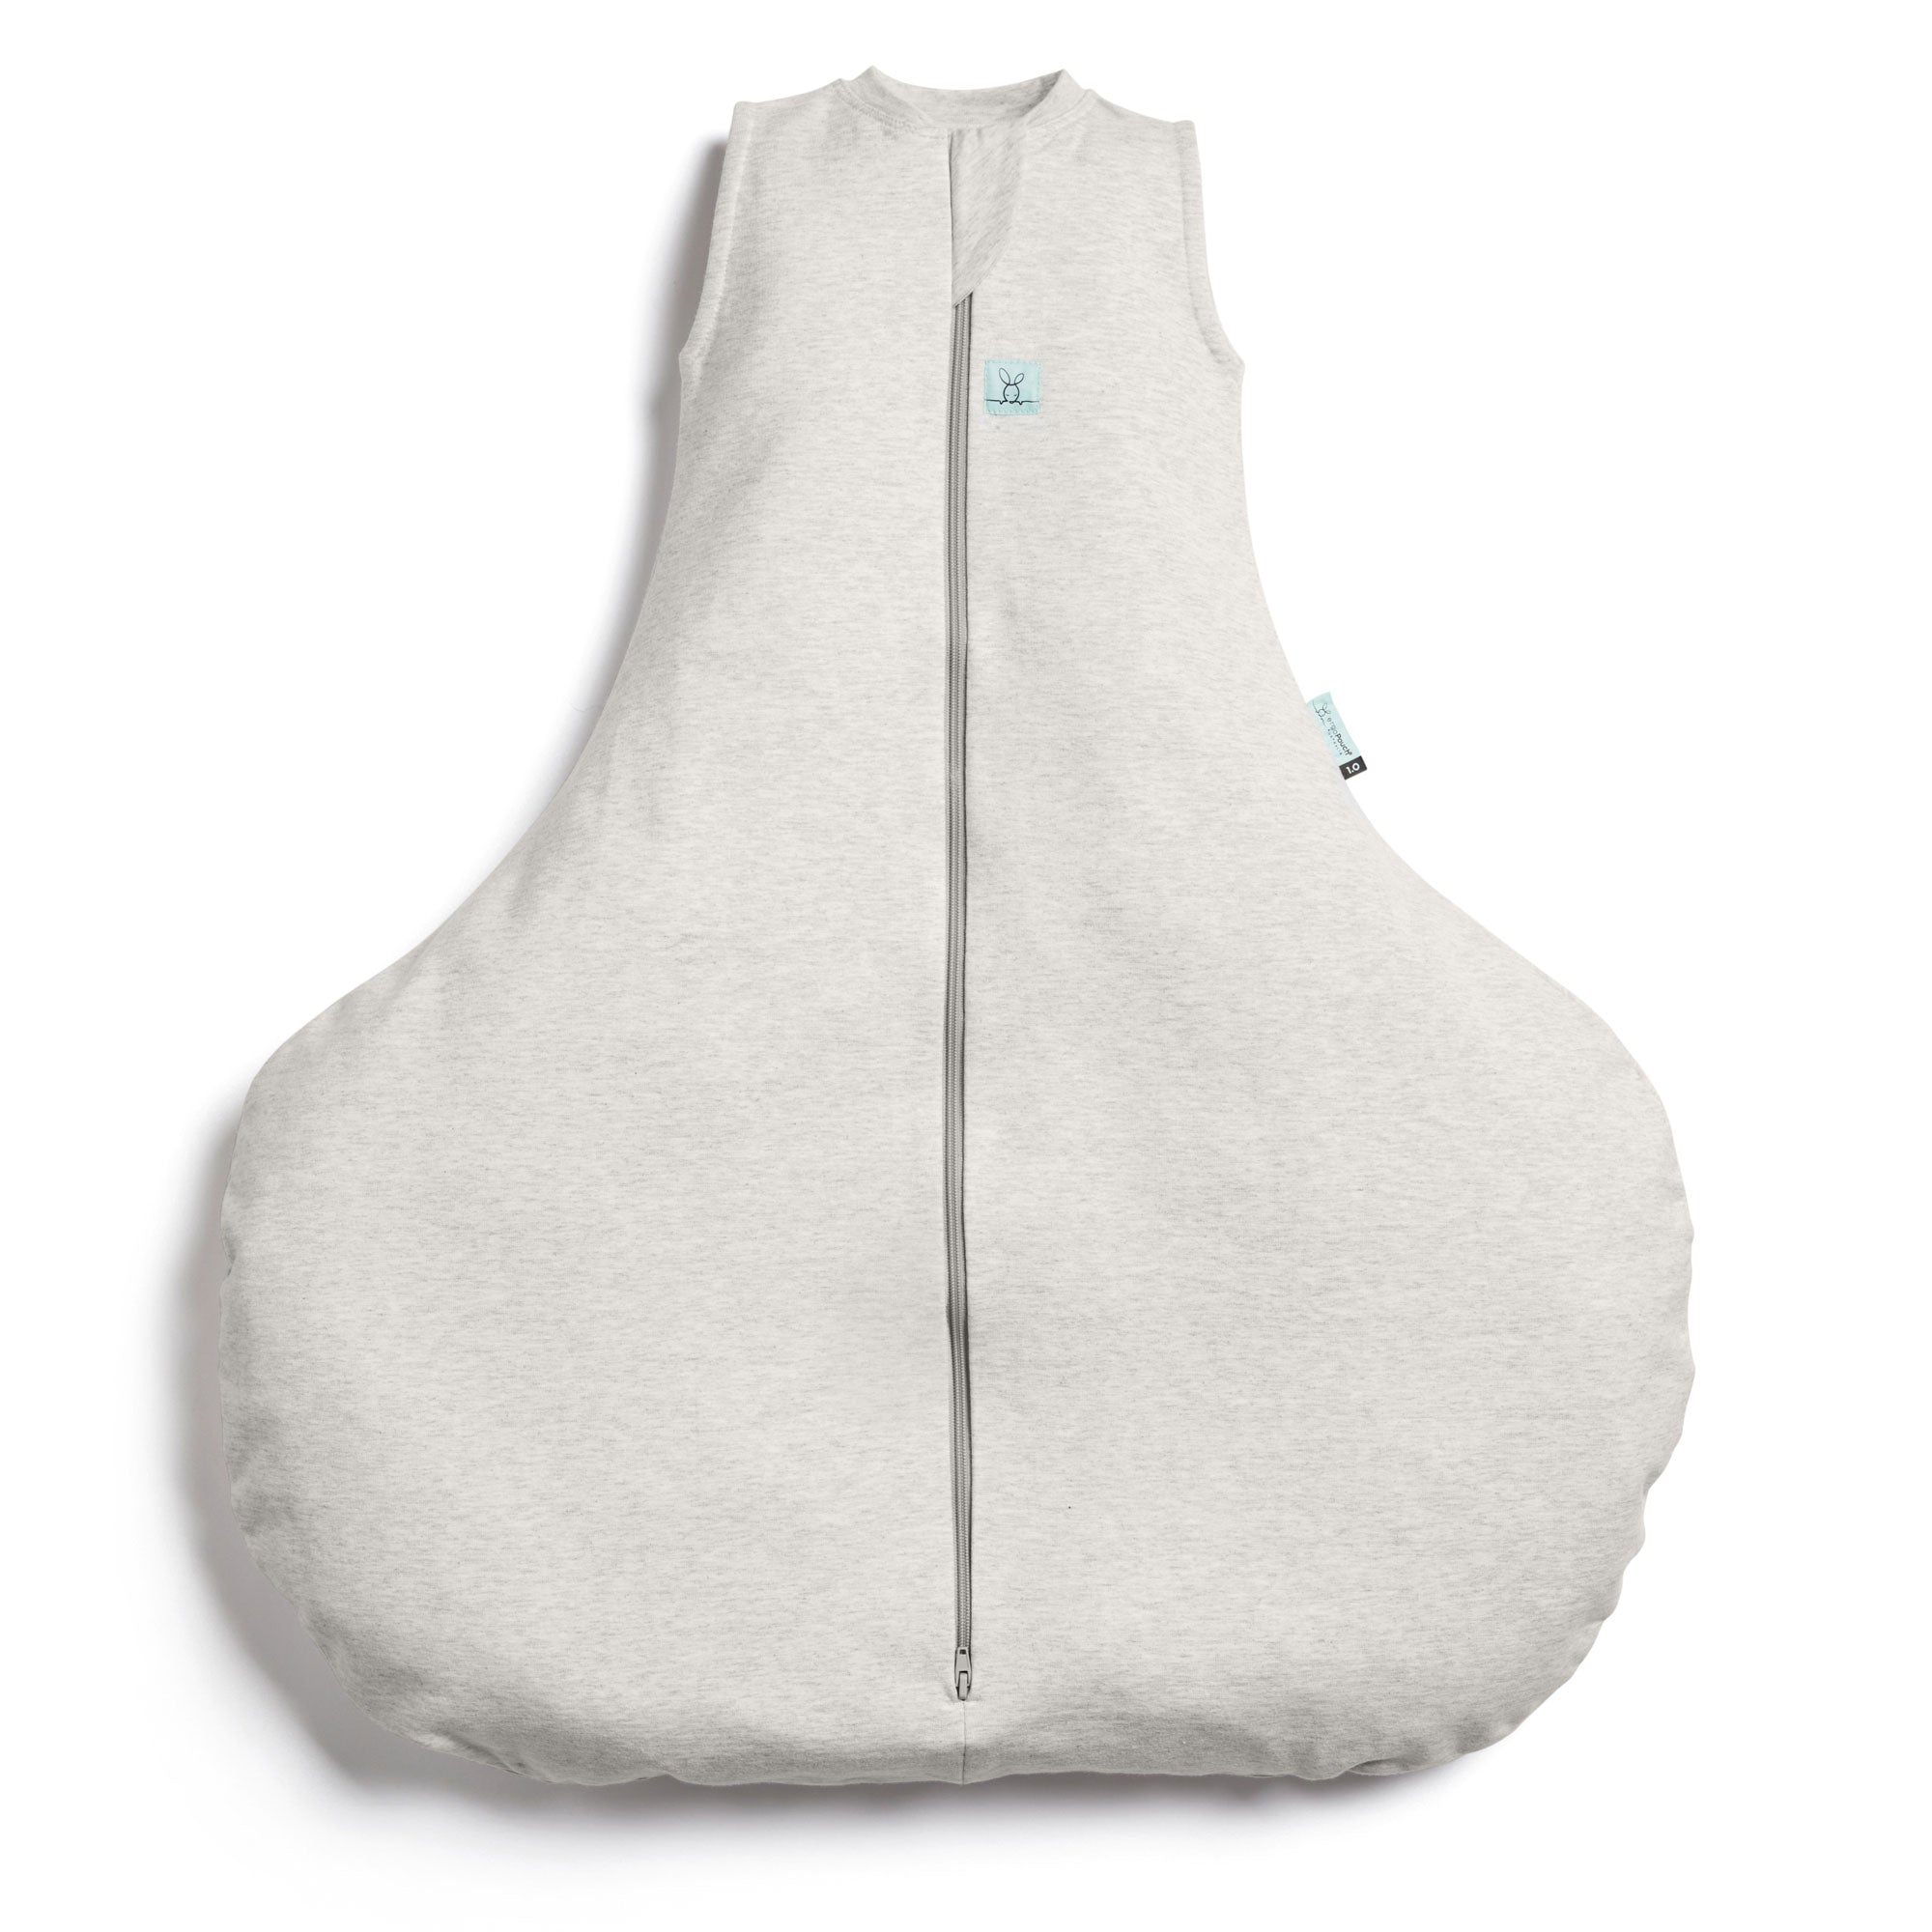 Hip Harness Jersey 1.0 tog Sleeping Bag